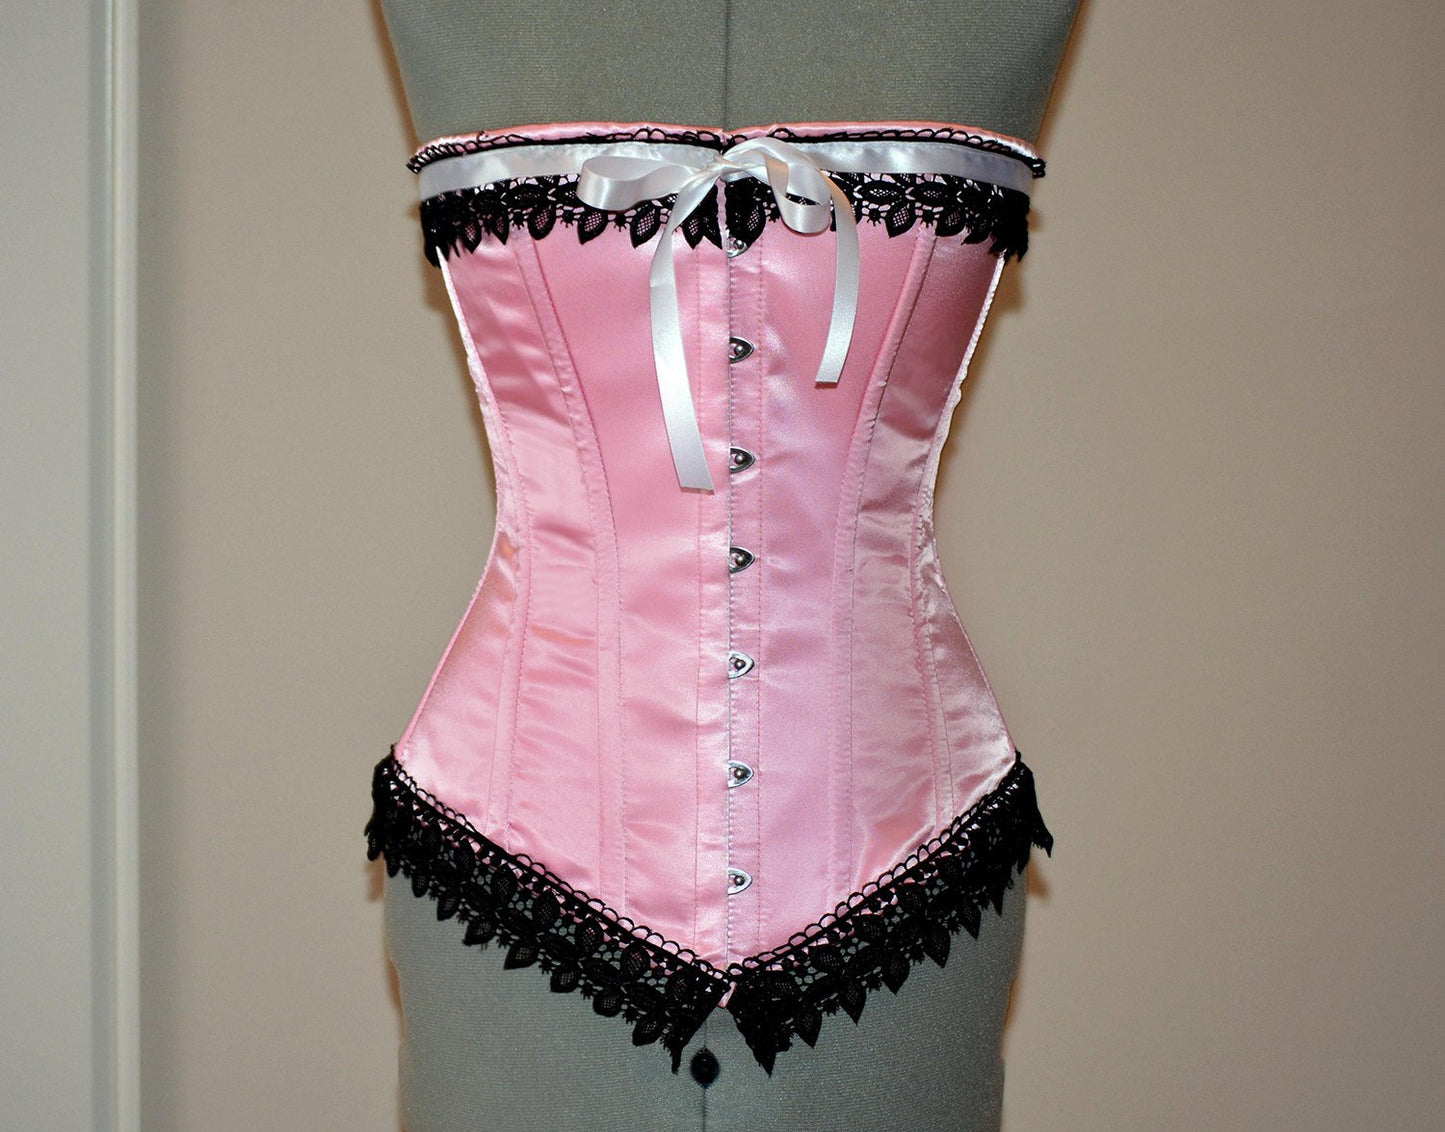 Elegant overbust steel boned corset in magenta taffeta